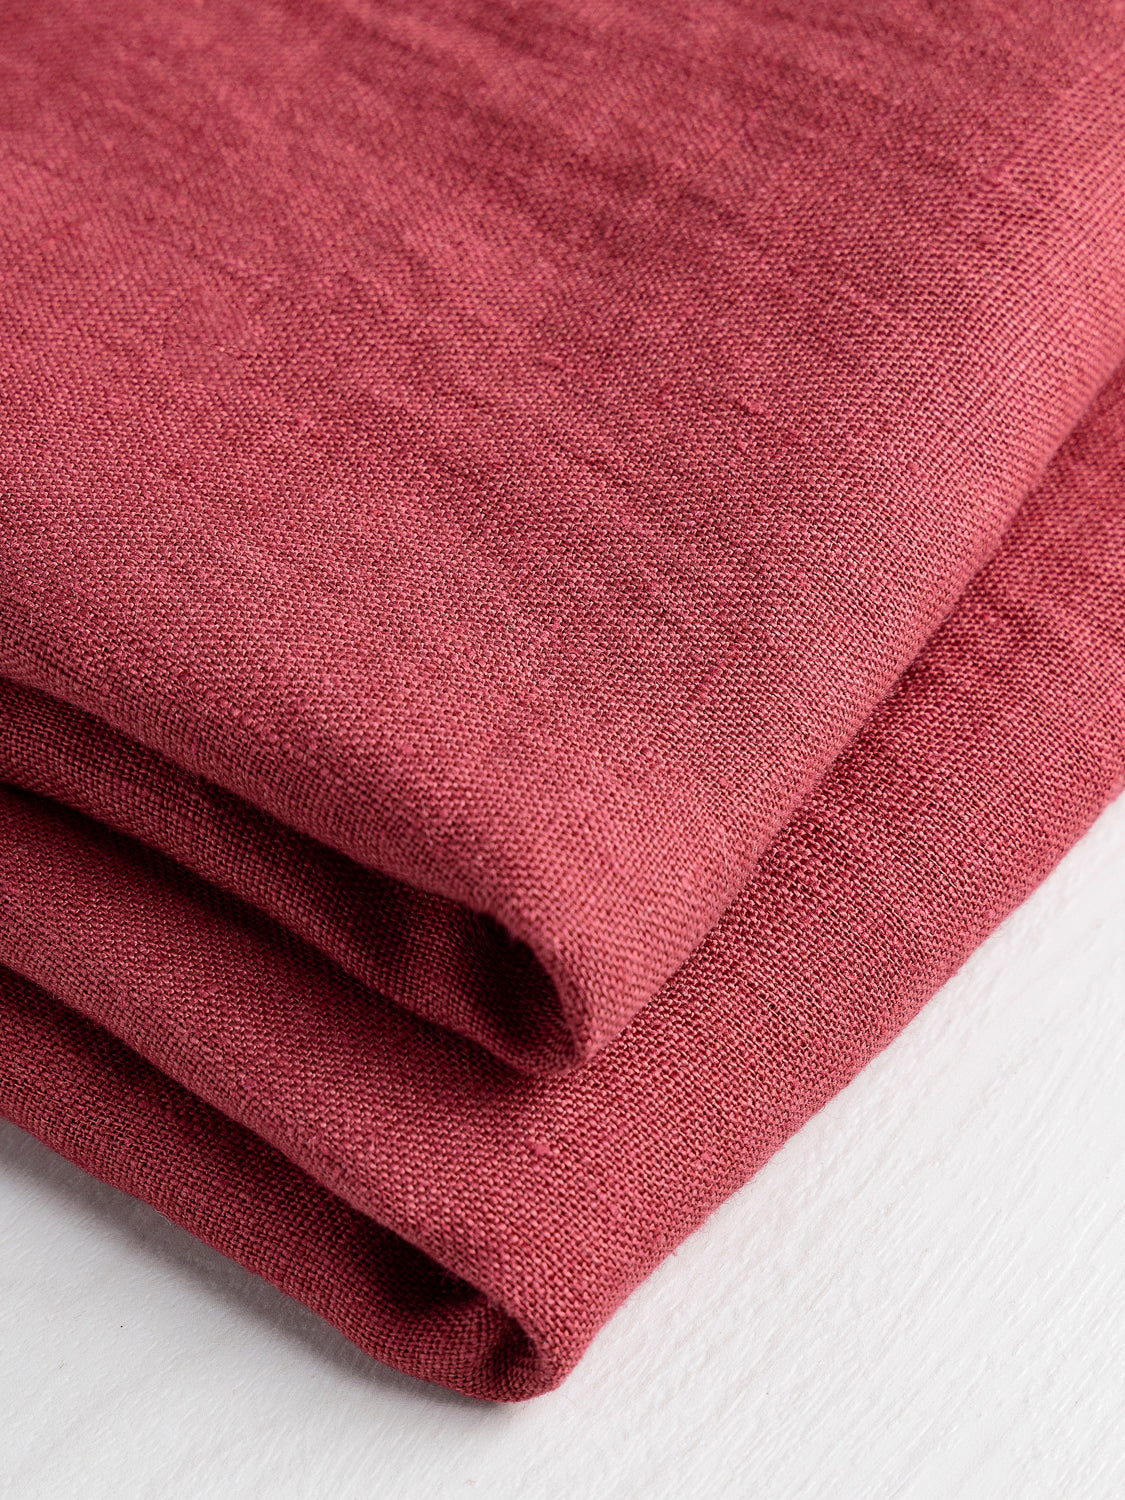 Linen Fabric, Online Fabric Store